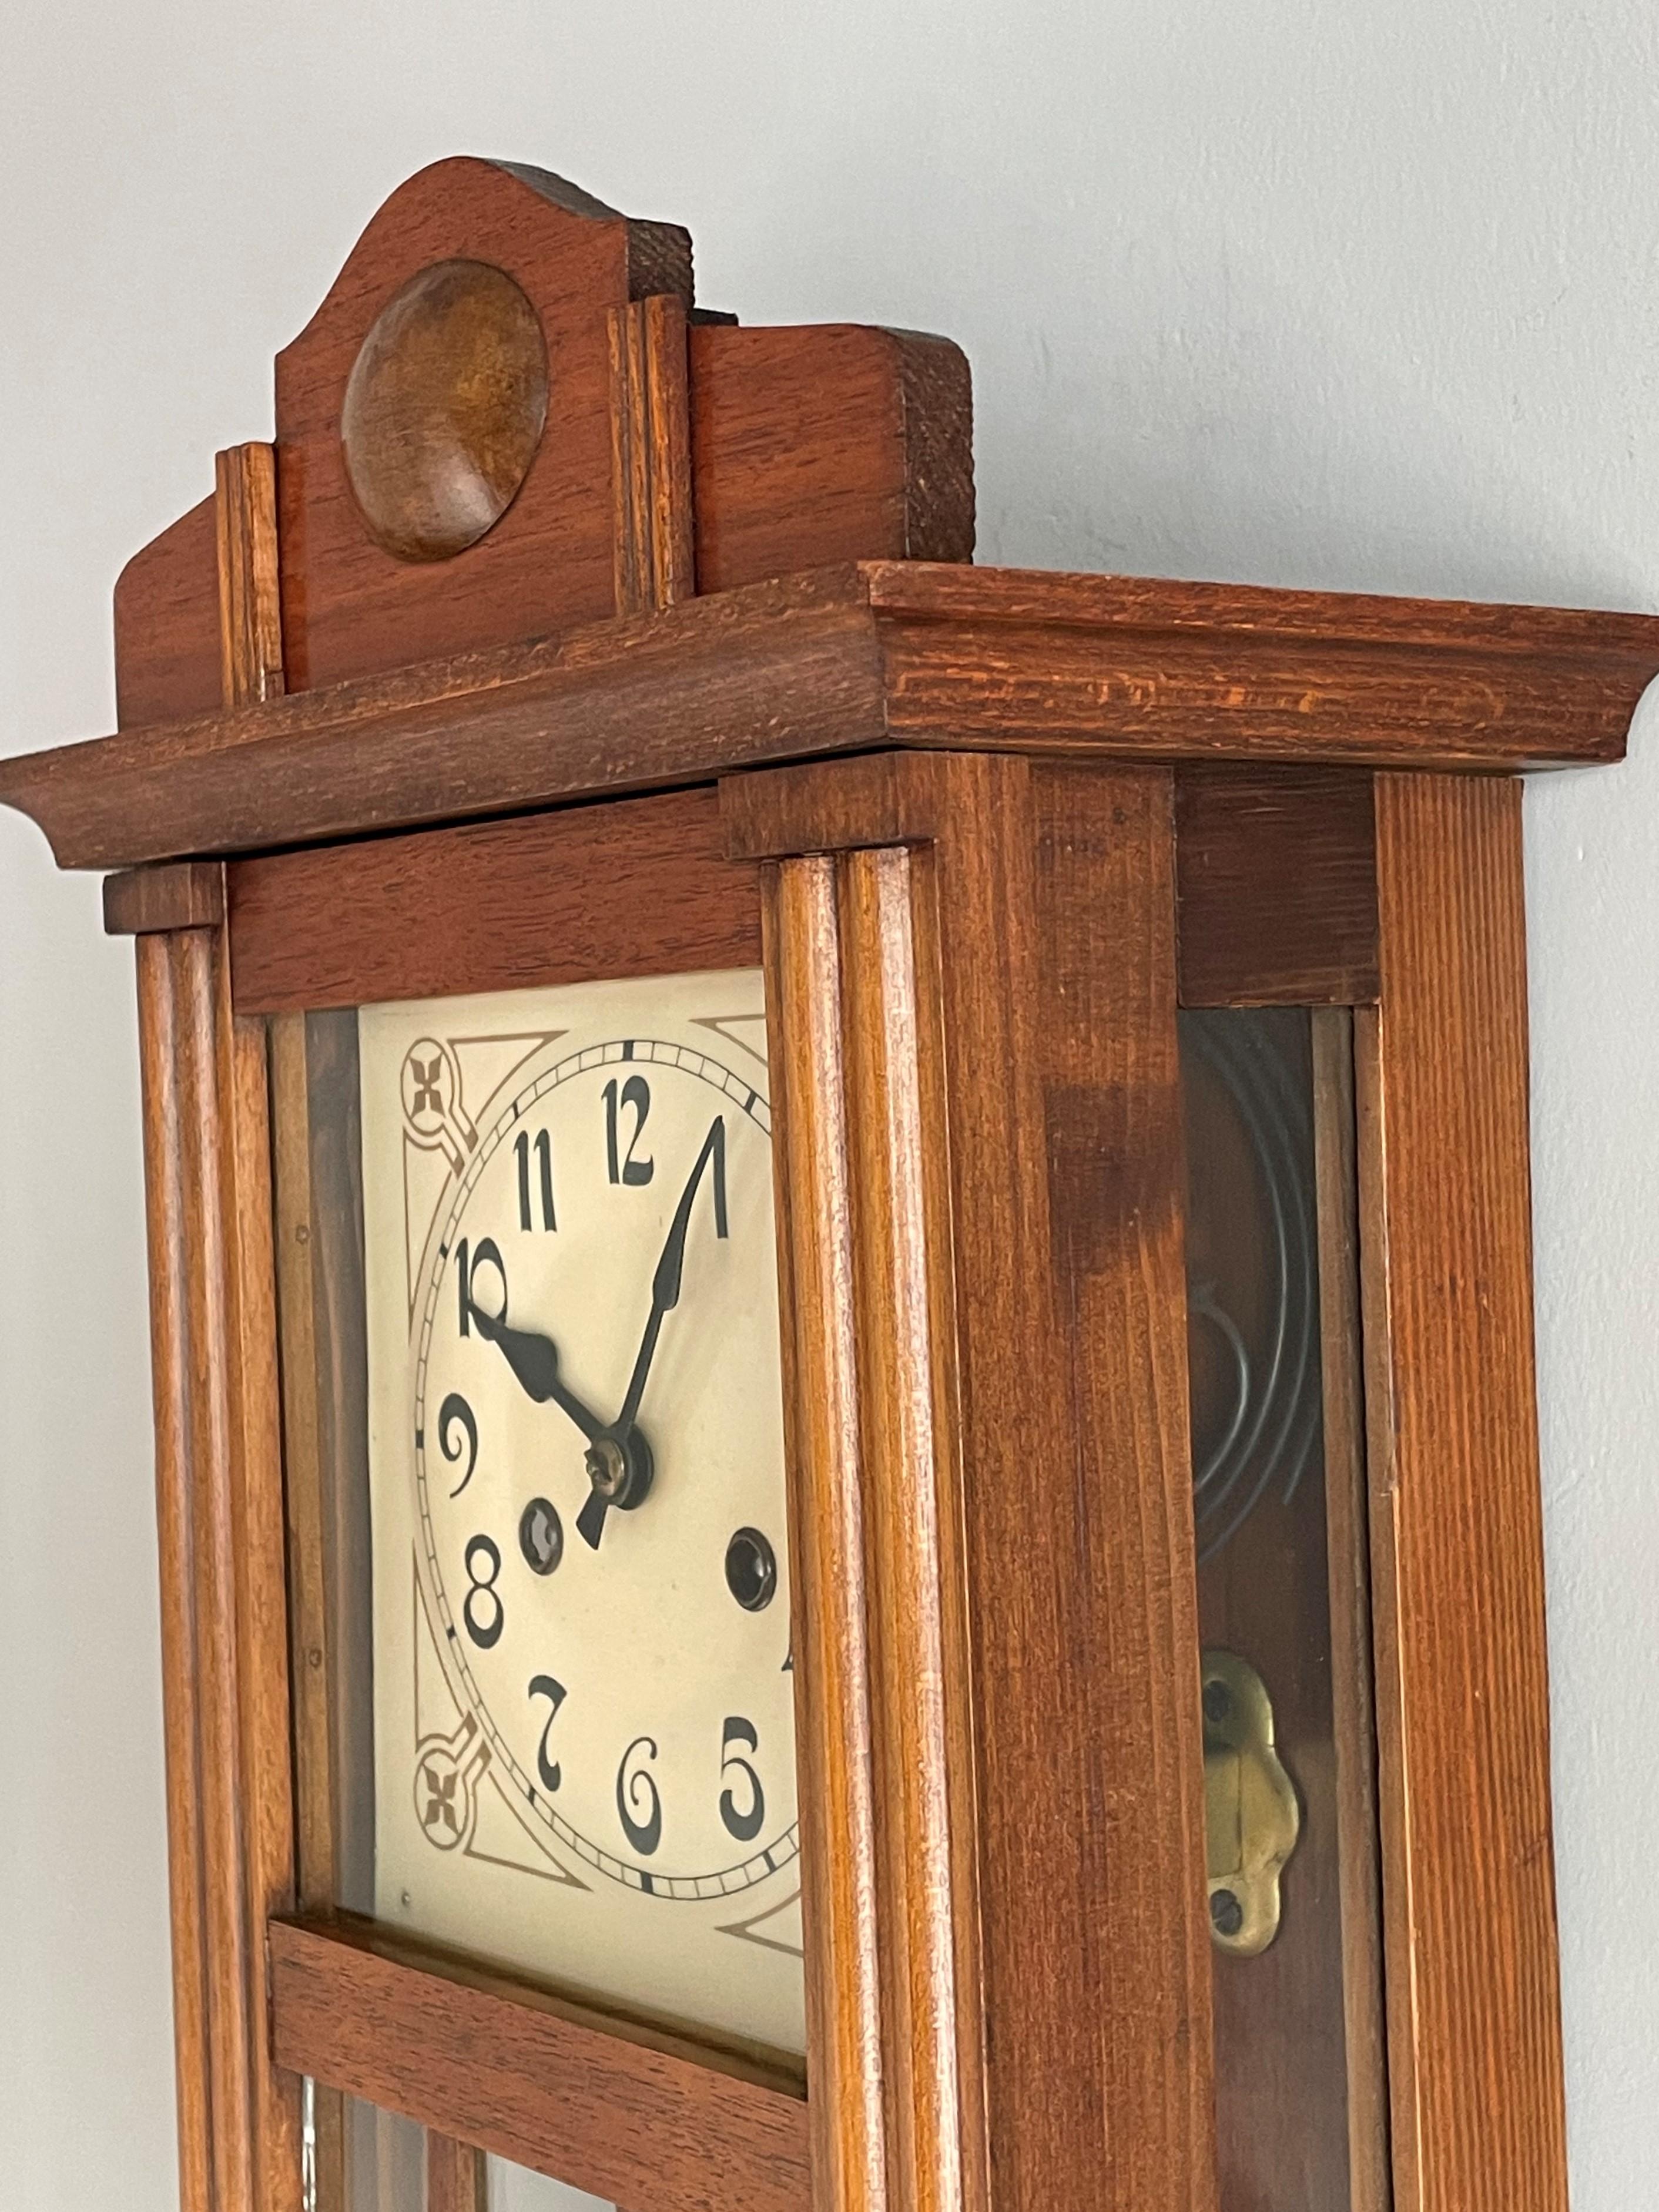 20th Century Rare & Small Geometrical Design Dutch Arts & Crafts Nutwood & Glass Wall Clock